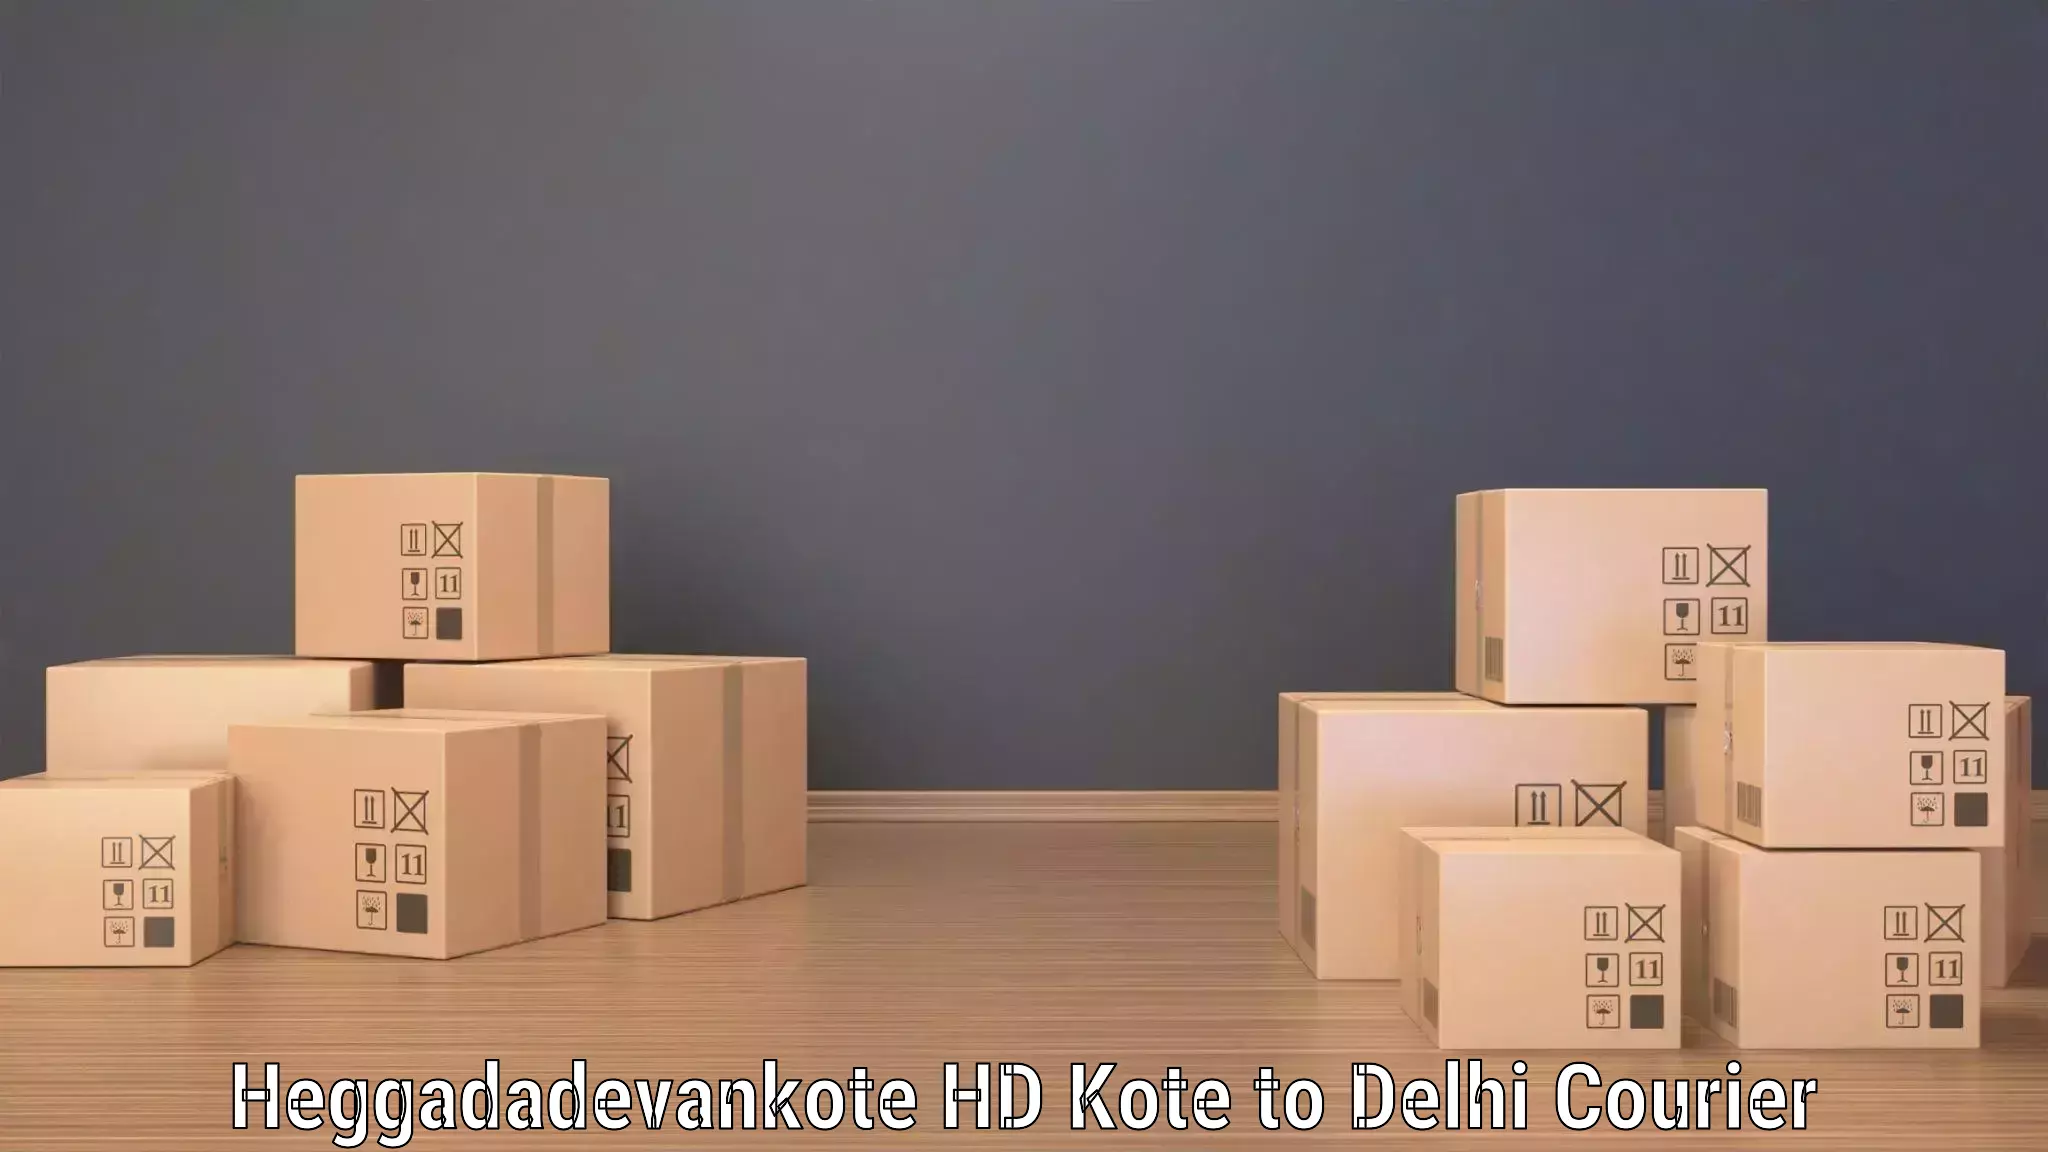 High-efficiency logistics Heggadadevankote HD Kote to Delhi Technological University DTU